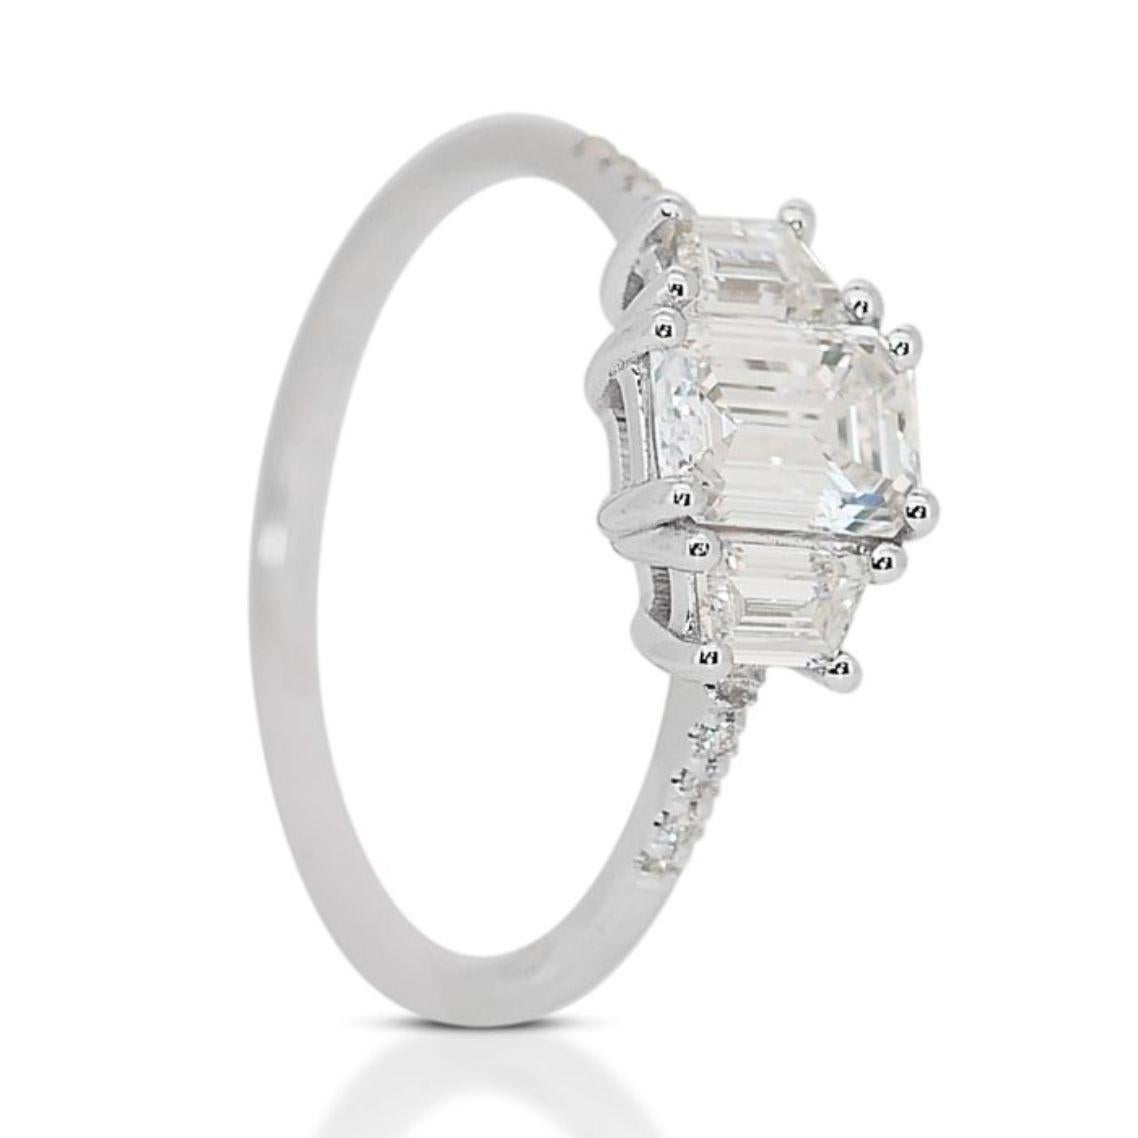 0.8 carat emerald cut diamond ring